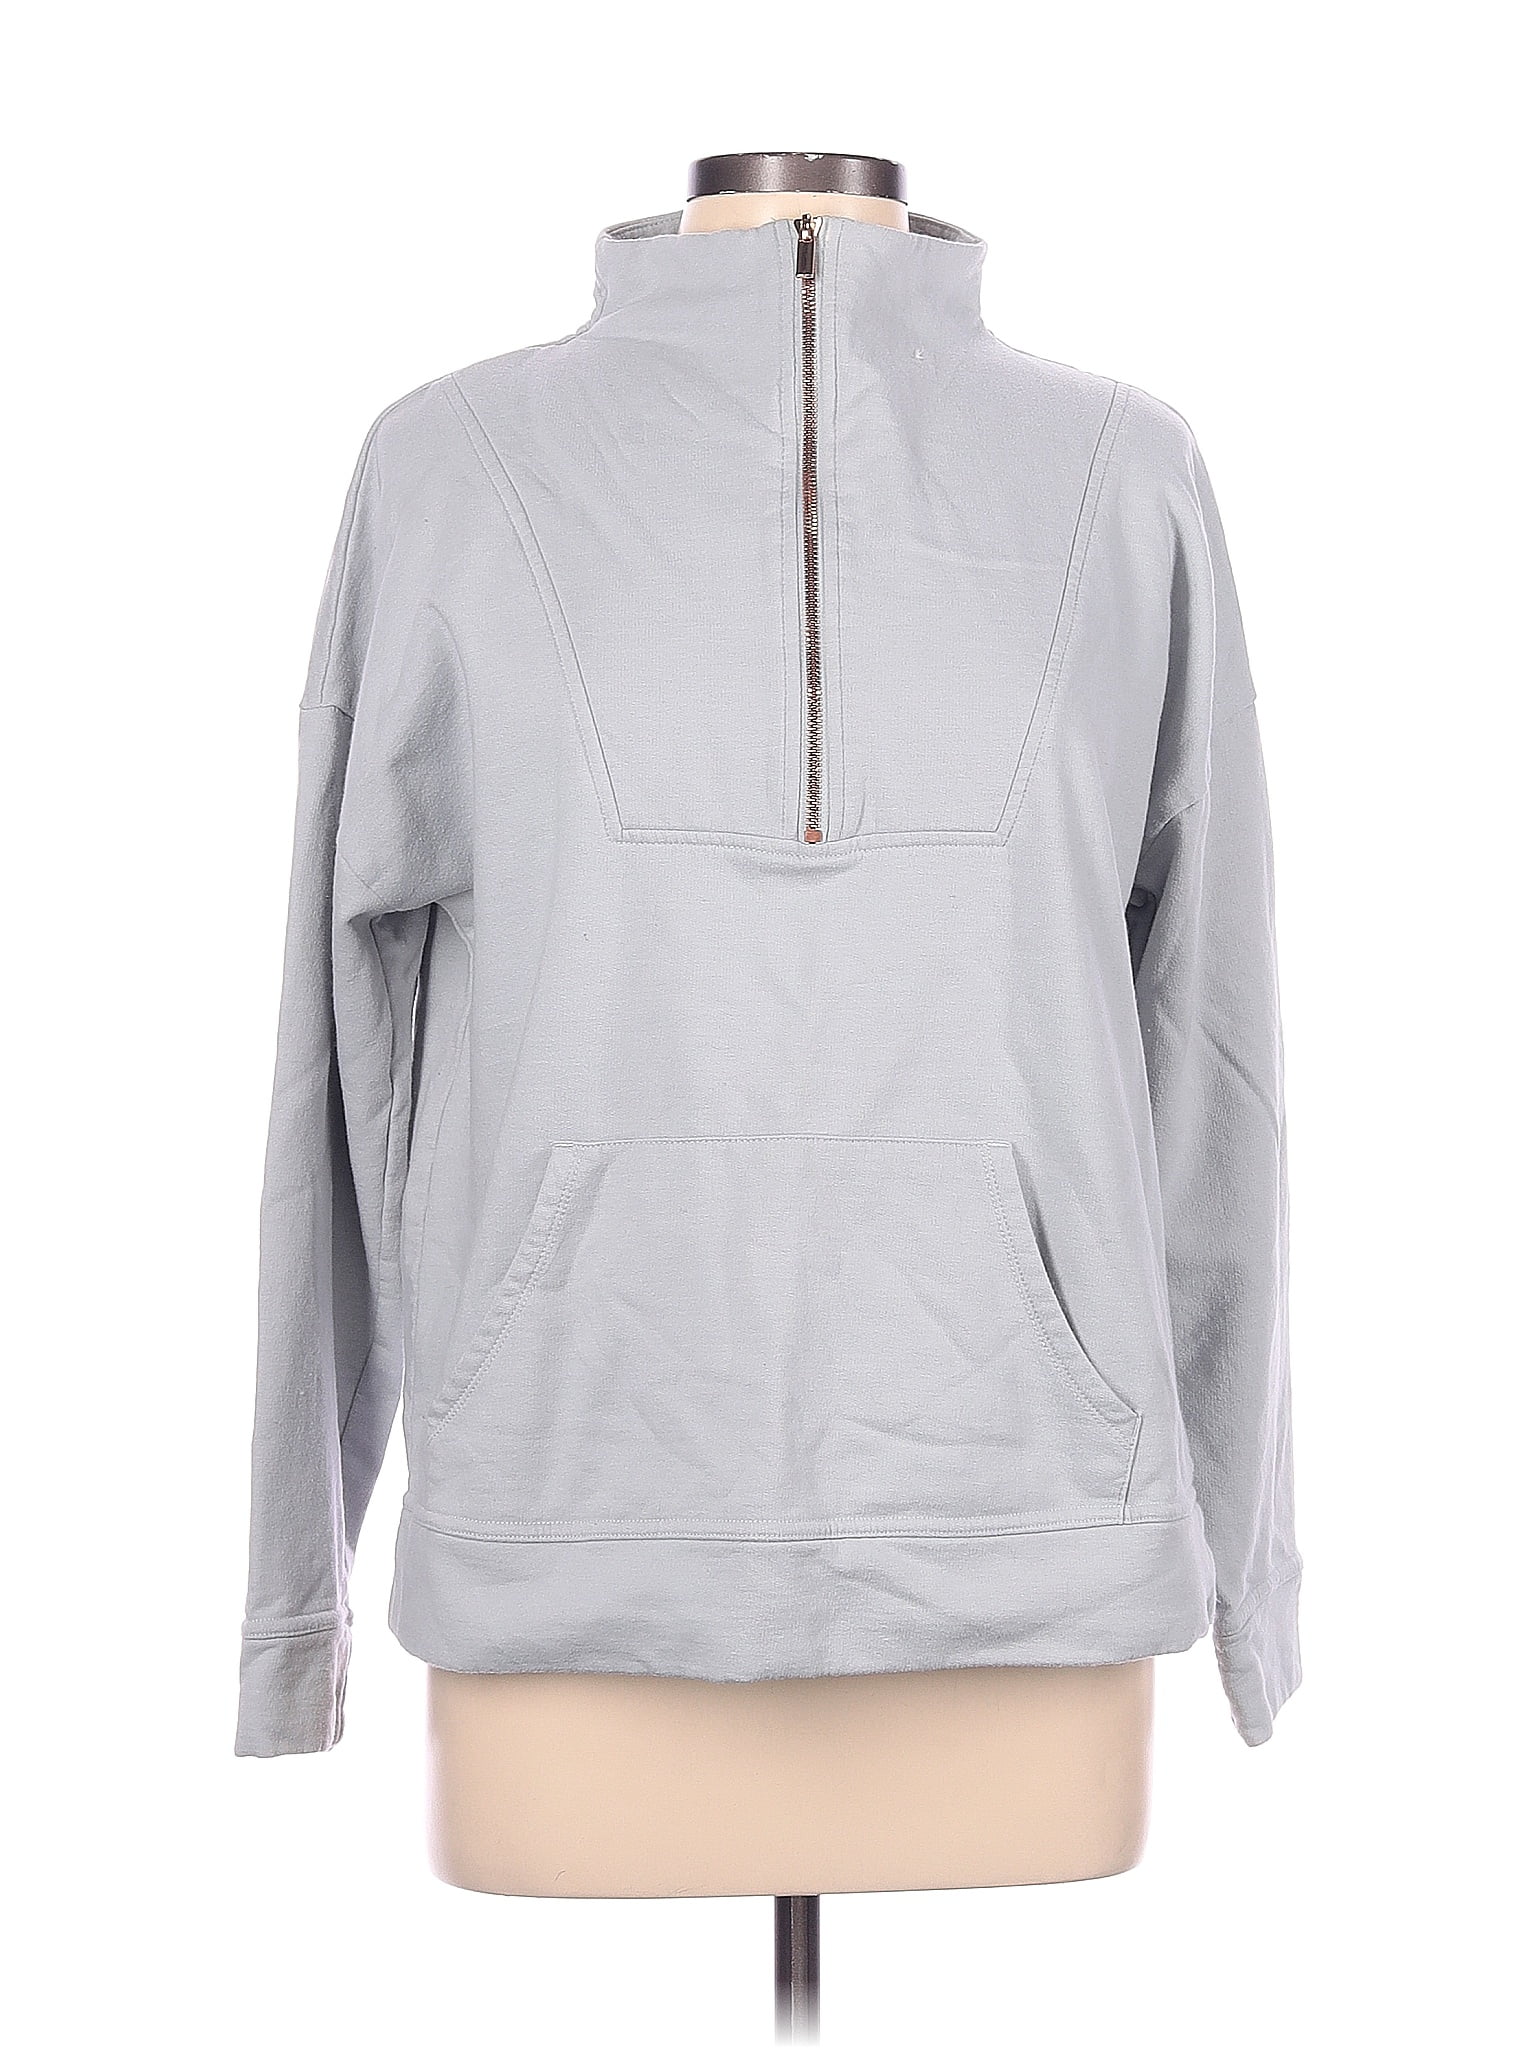 Balance Collection Gray Sweatshirt Size L - 69% off | thredUP